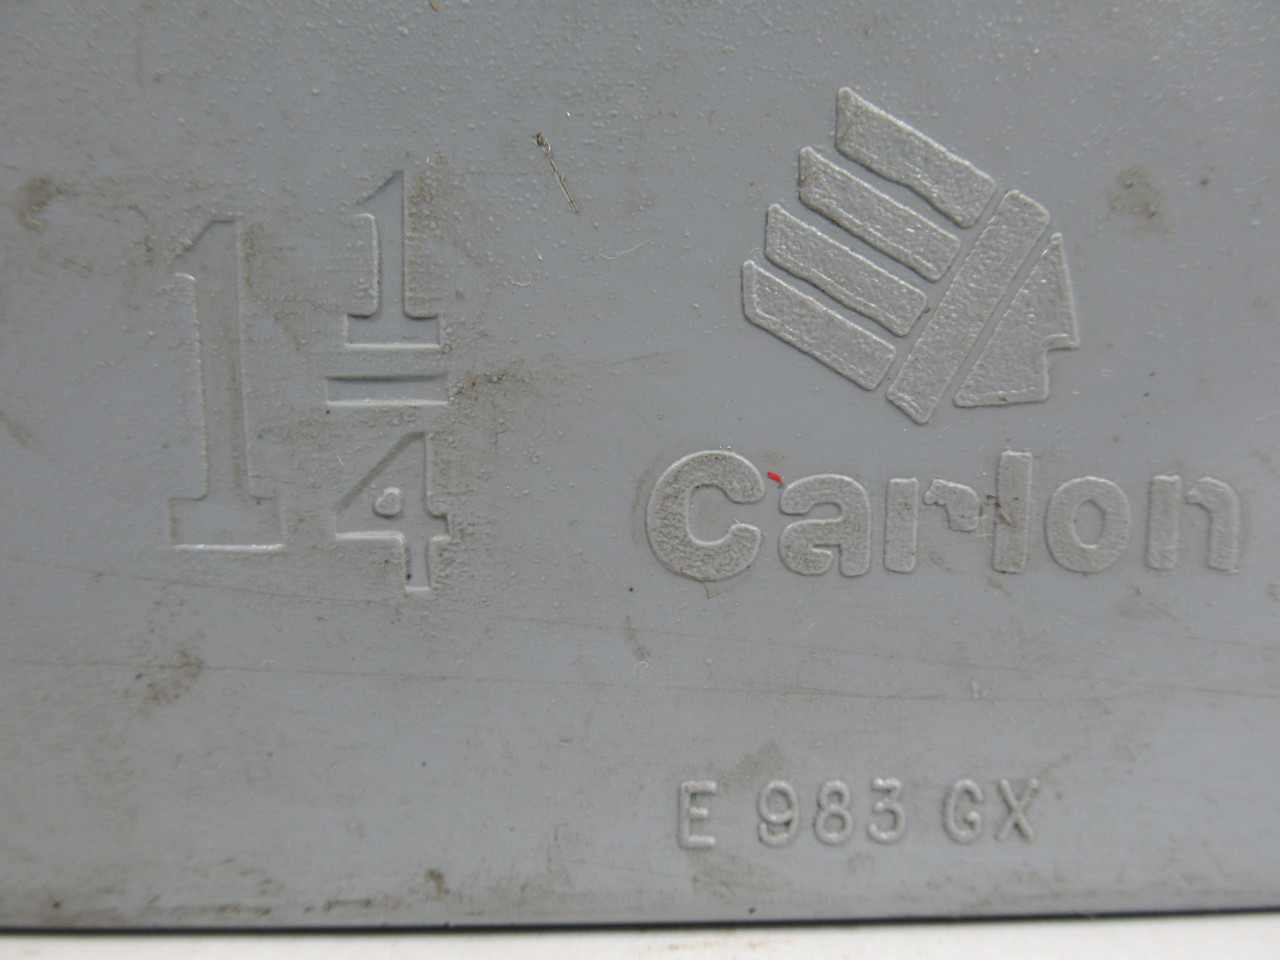 Carlon E983GX PVC Conduit Body 1-1/4" LL *No Seal* USED